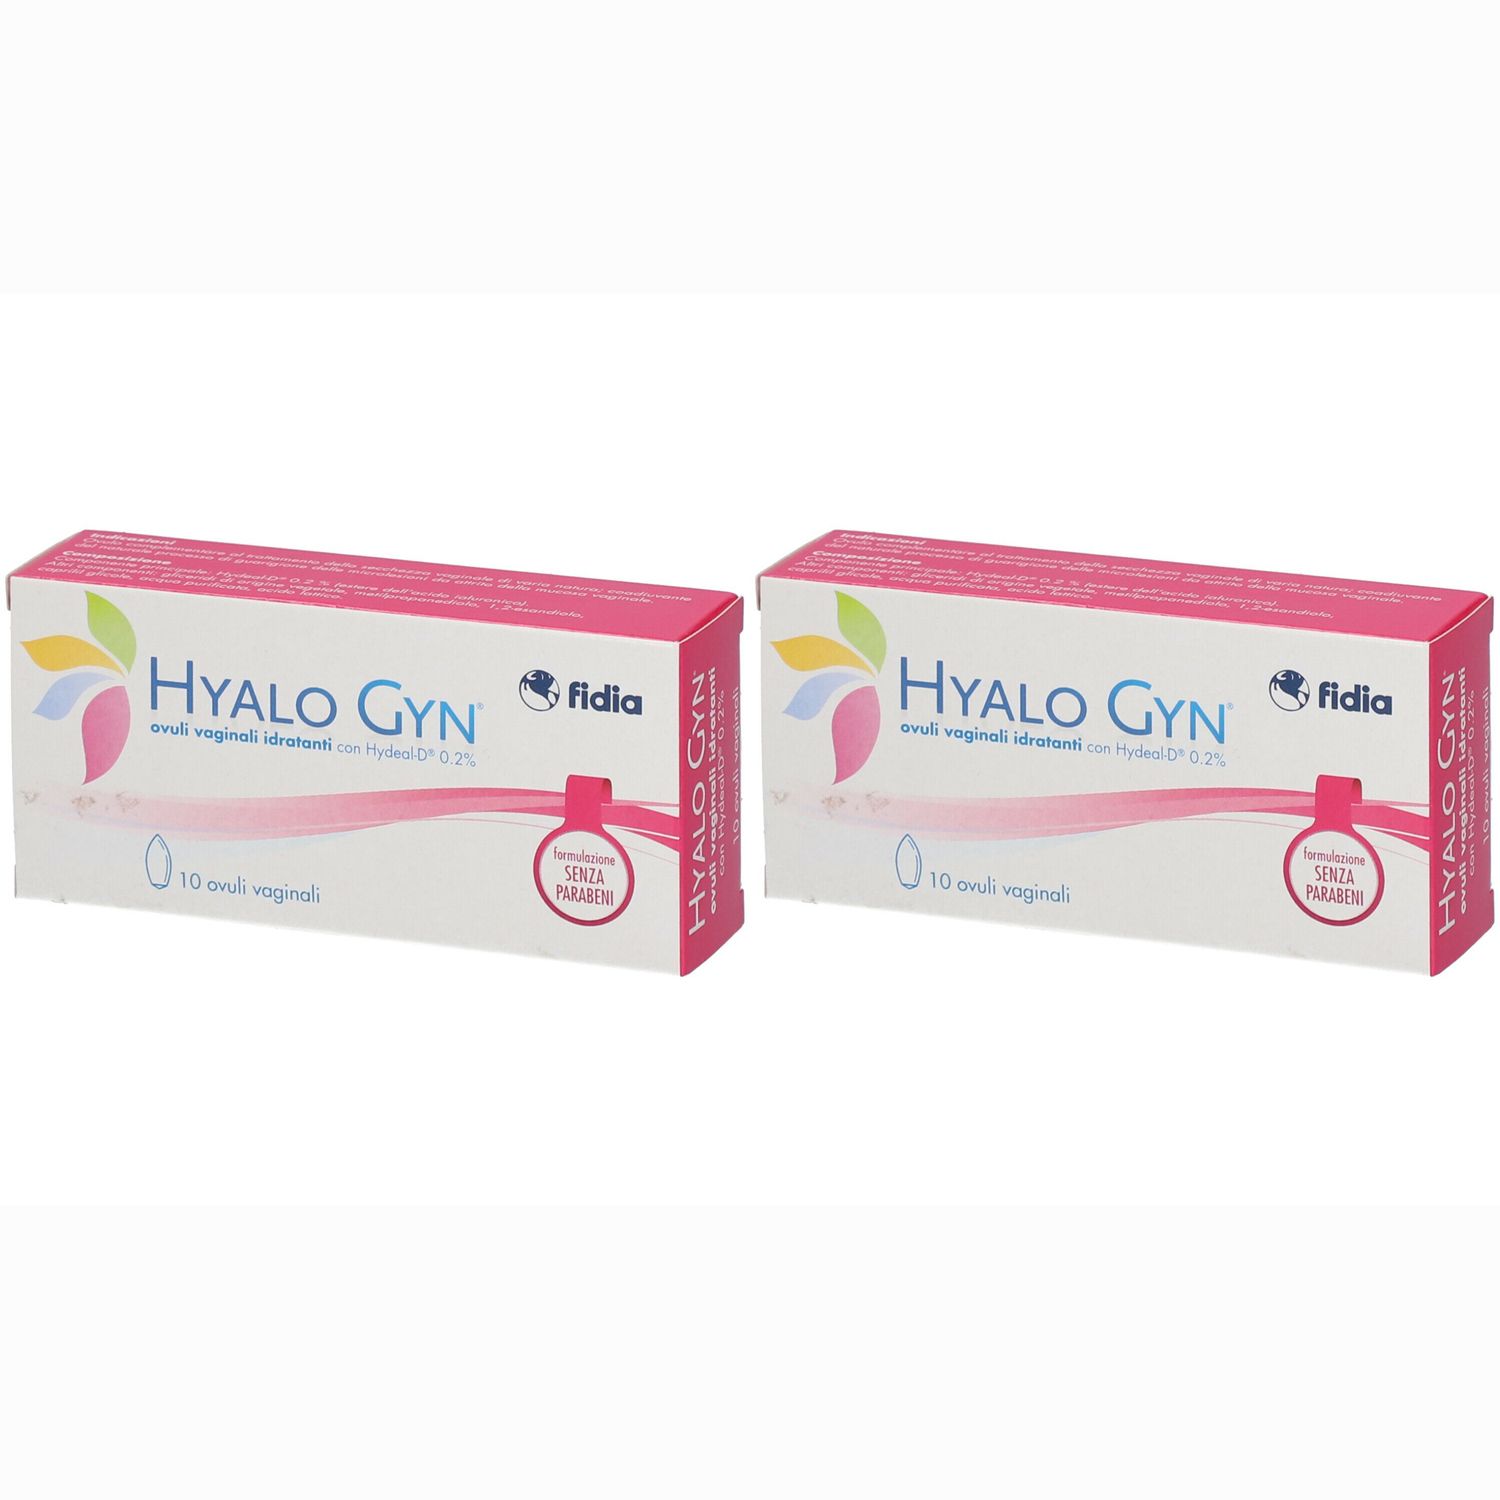 Hyalo Gyn® Ovuli Vaginali Idratanti